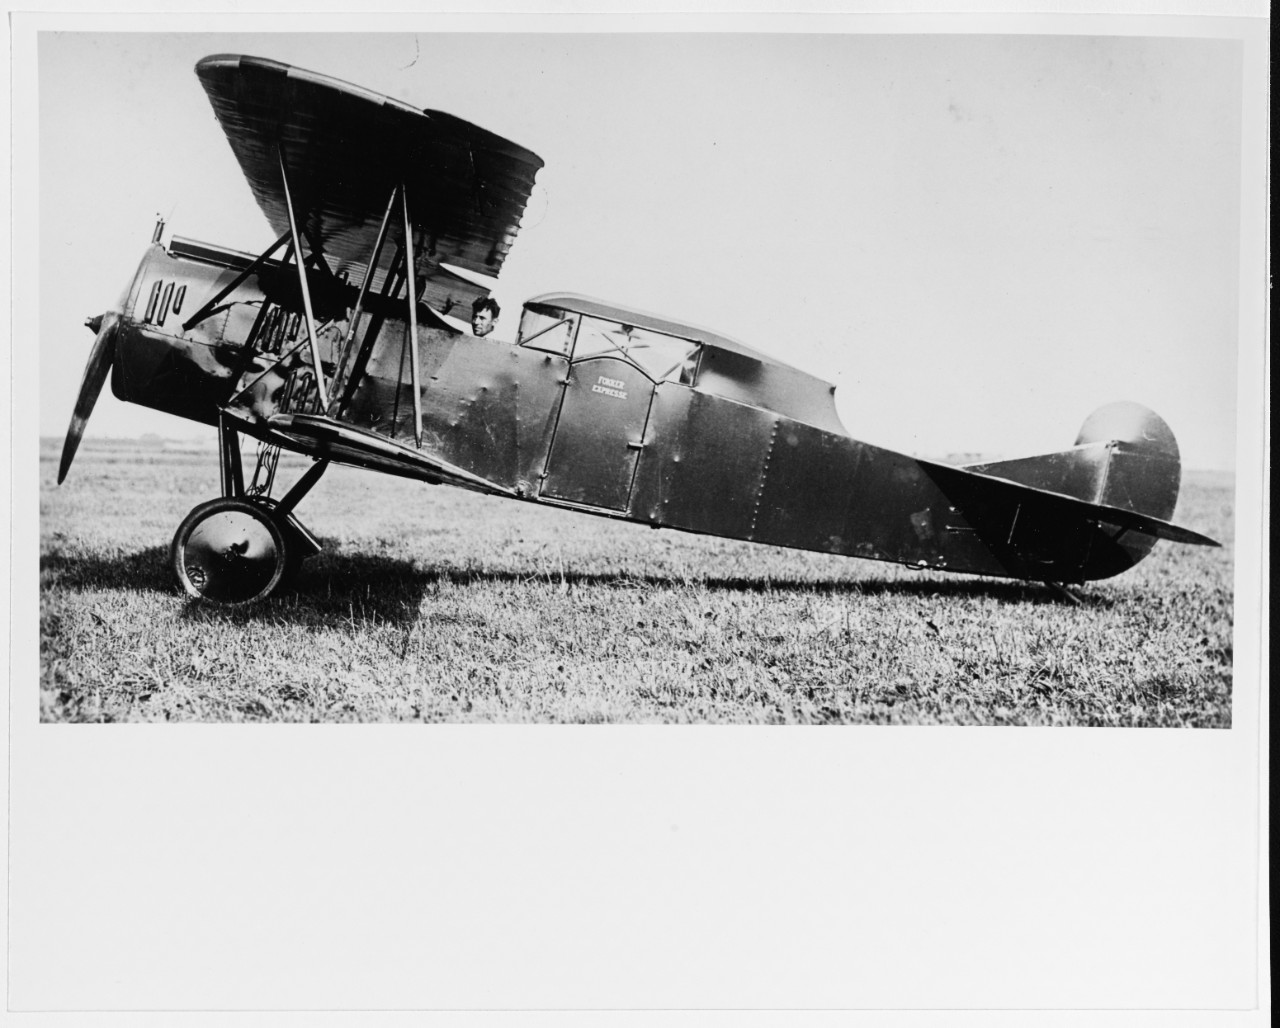 Fokker "Expresse" aircraft